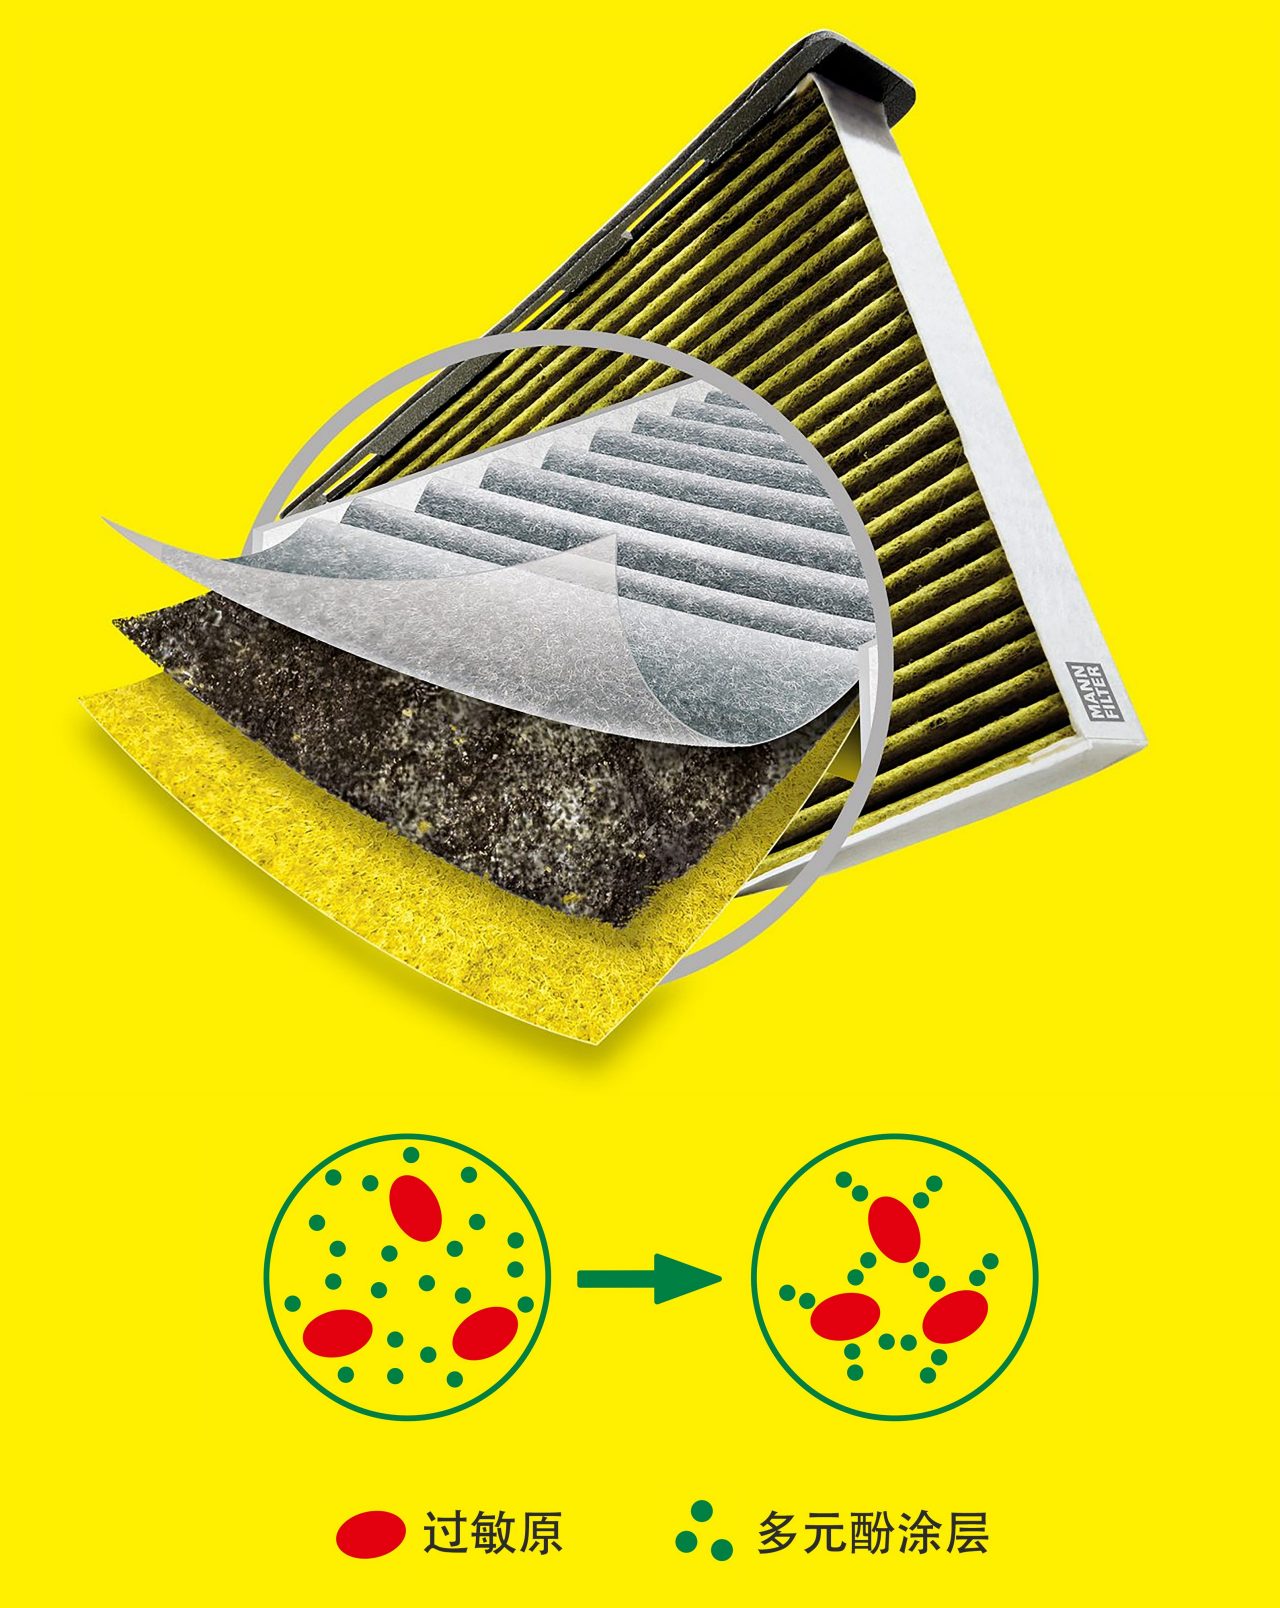 Cabin air filter with polyphenol: FreciousPlus by MANN-FILTER